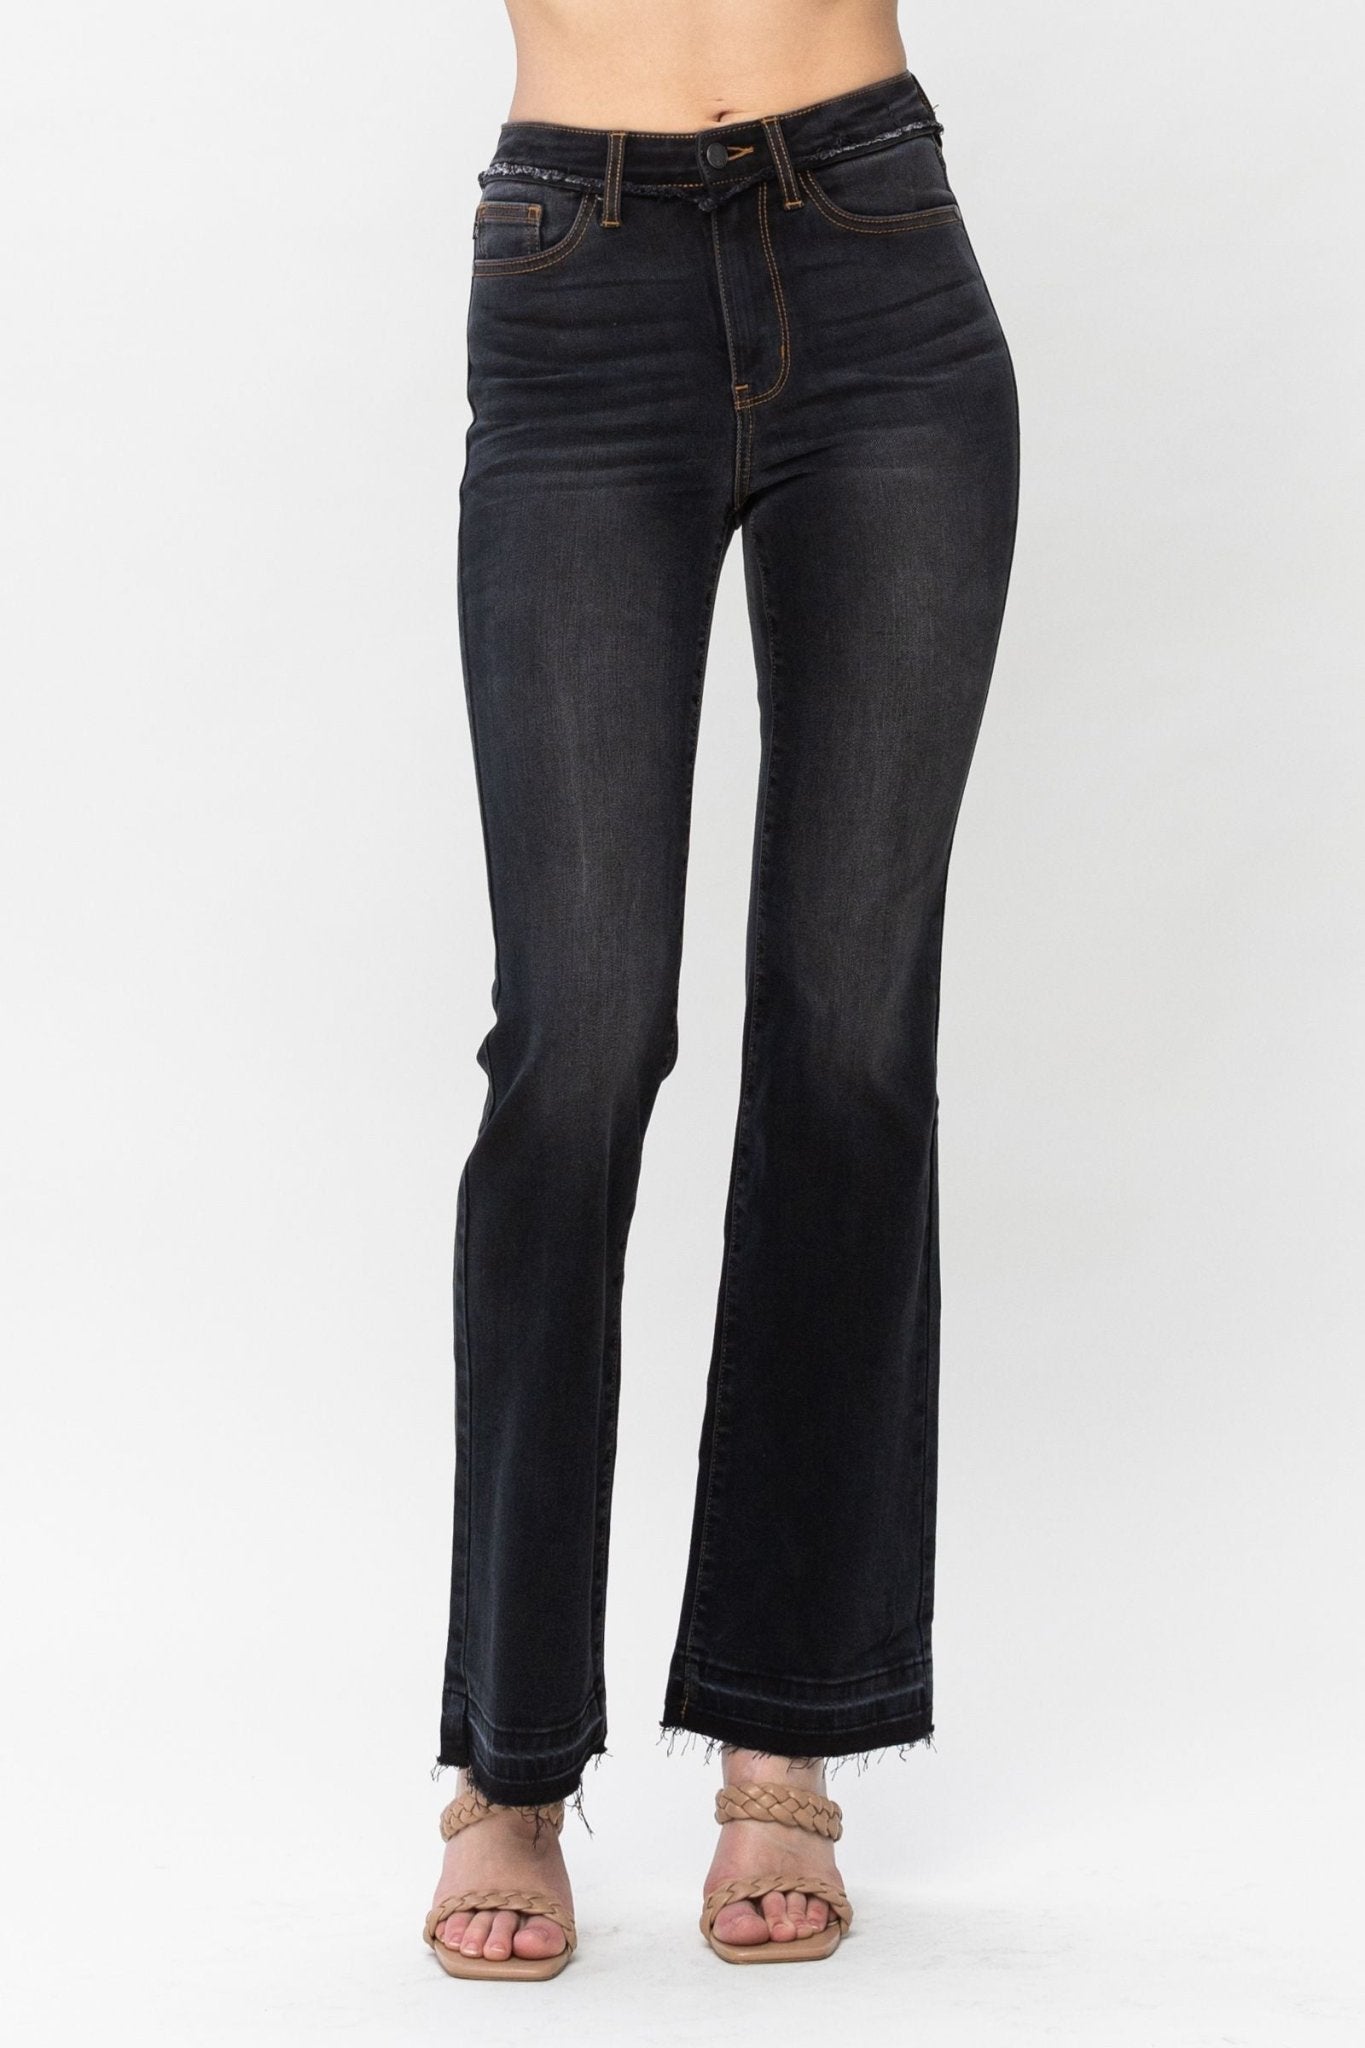 La-la Edgy Black Slim Bootcut Jeans | Judy Blue | 82535 - Lavender Hills BeautyJudy Blue